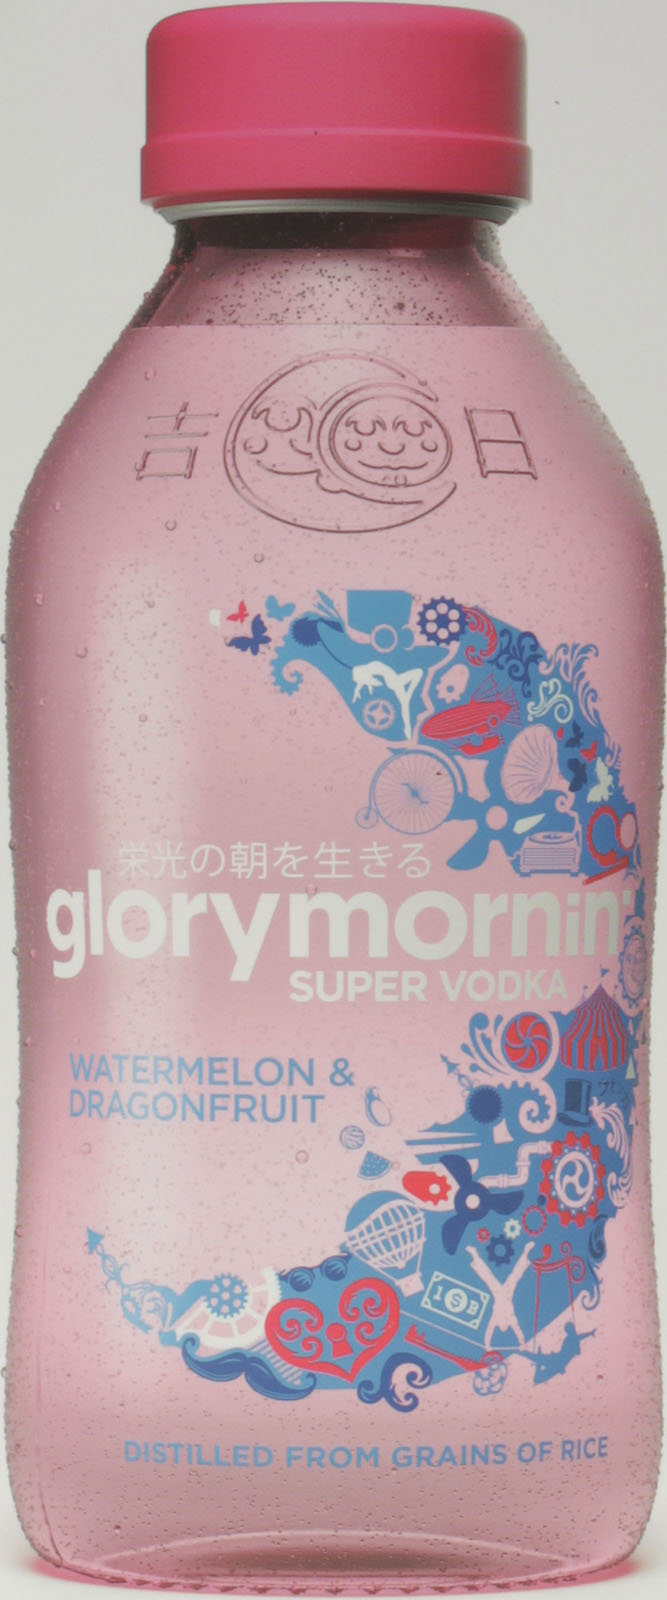 Glory Mornin Super Vodka - & Dragonfruit Watermelone im